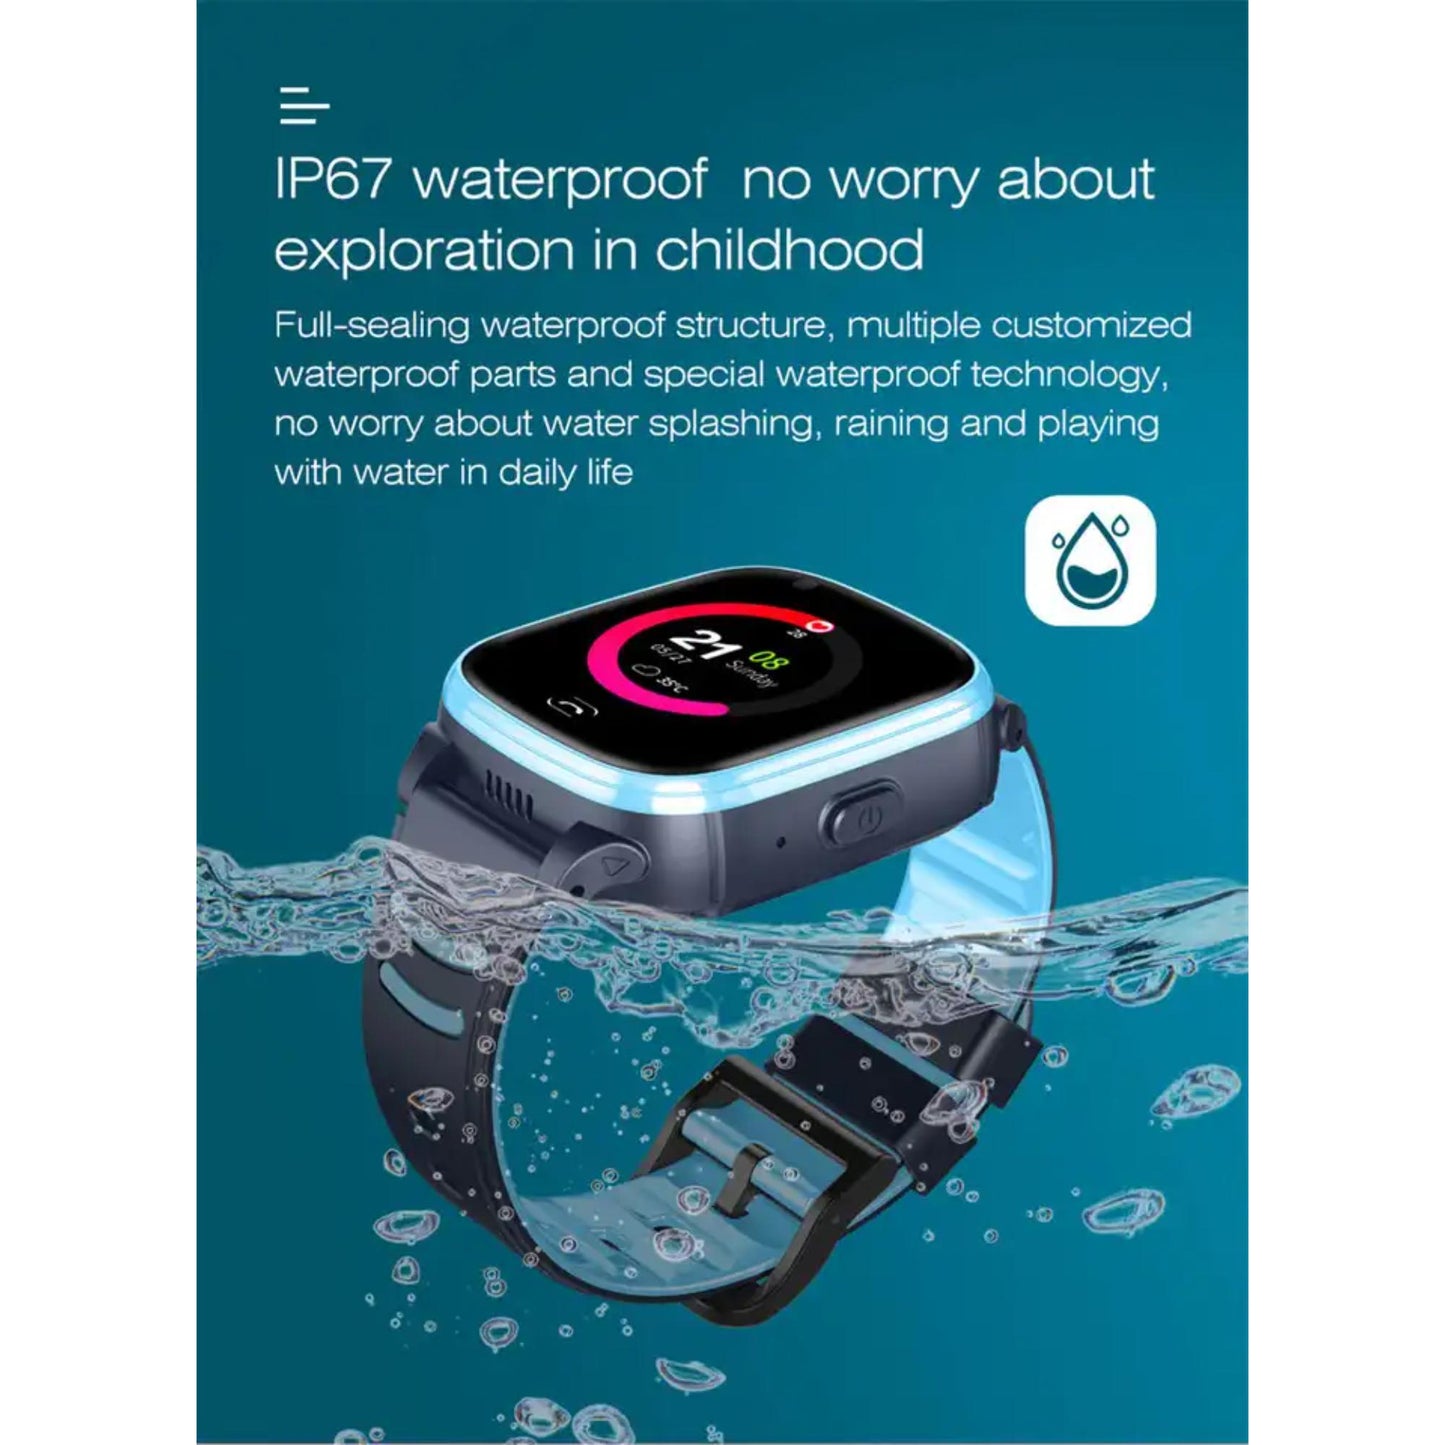 Smartwatch für Kinder - Lige A80, 1,4-Zoll-IPS-Display, langlebiger 700-mAh-Akku, HD-Videoanrufe, Health Tracker. | Blue Chilli Electronics.